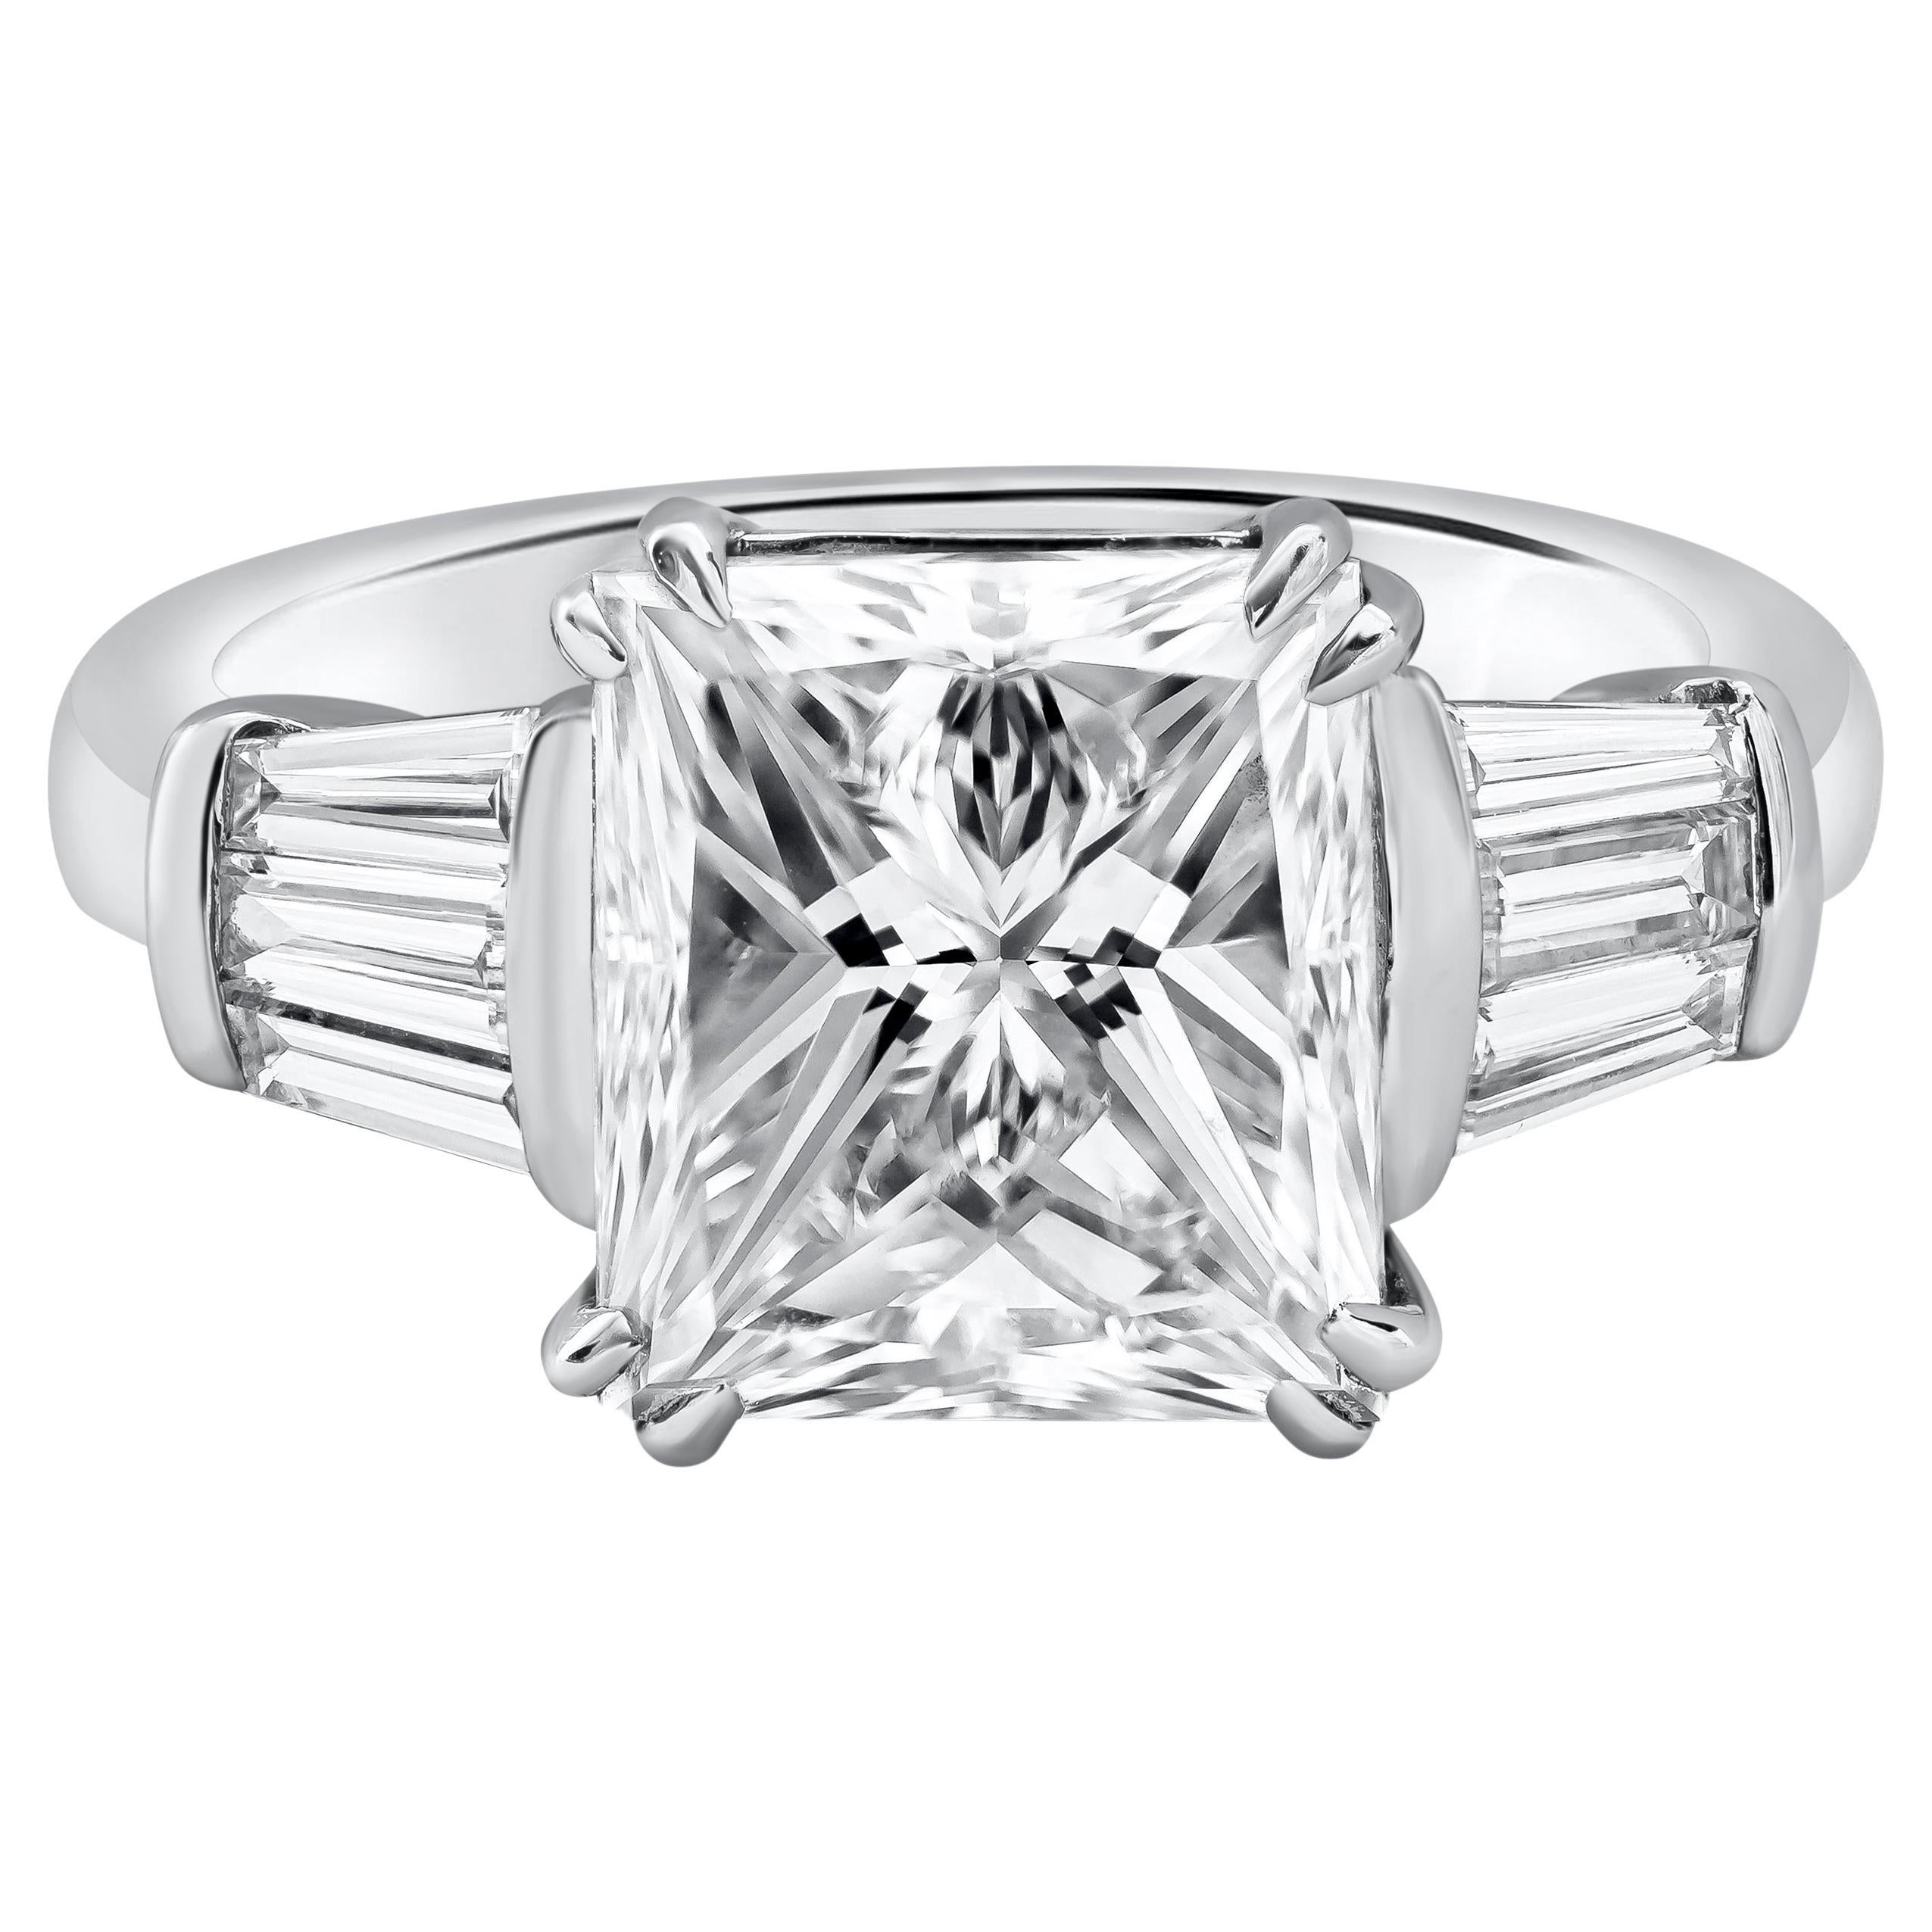 Roman Malakov GIA Certified 5.03 Carat Princess Cut Diamond Engagement Ring